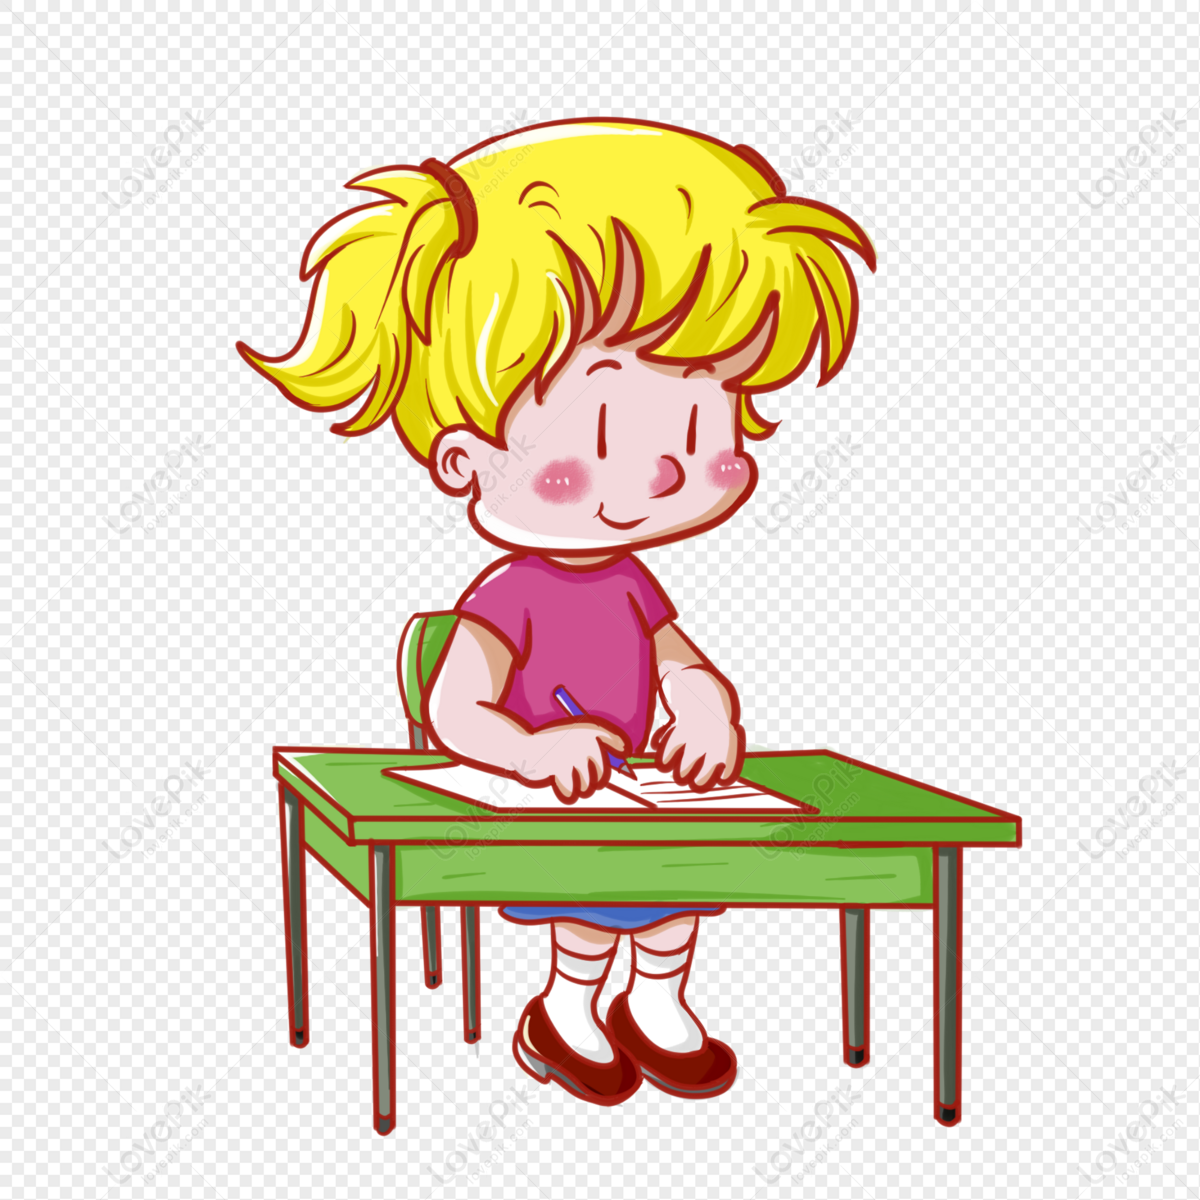 Girl doing homework during the school quarter, and homework, book, desk png free download